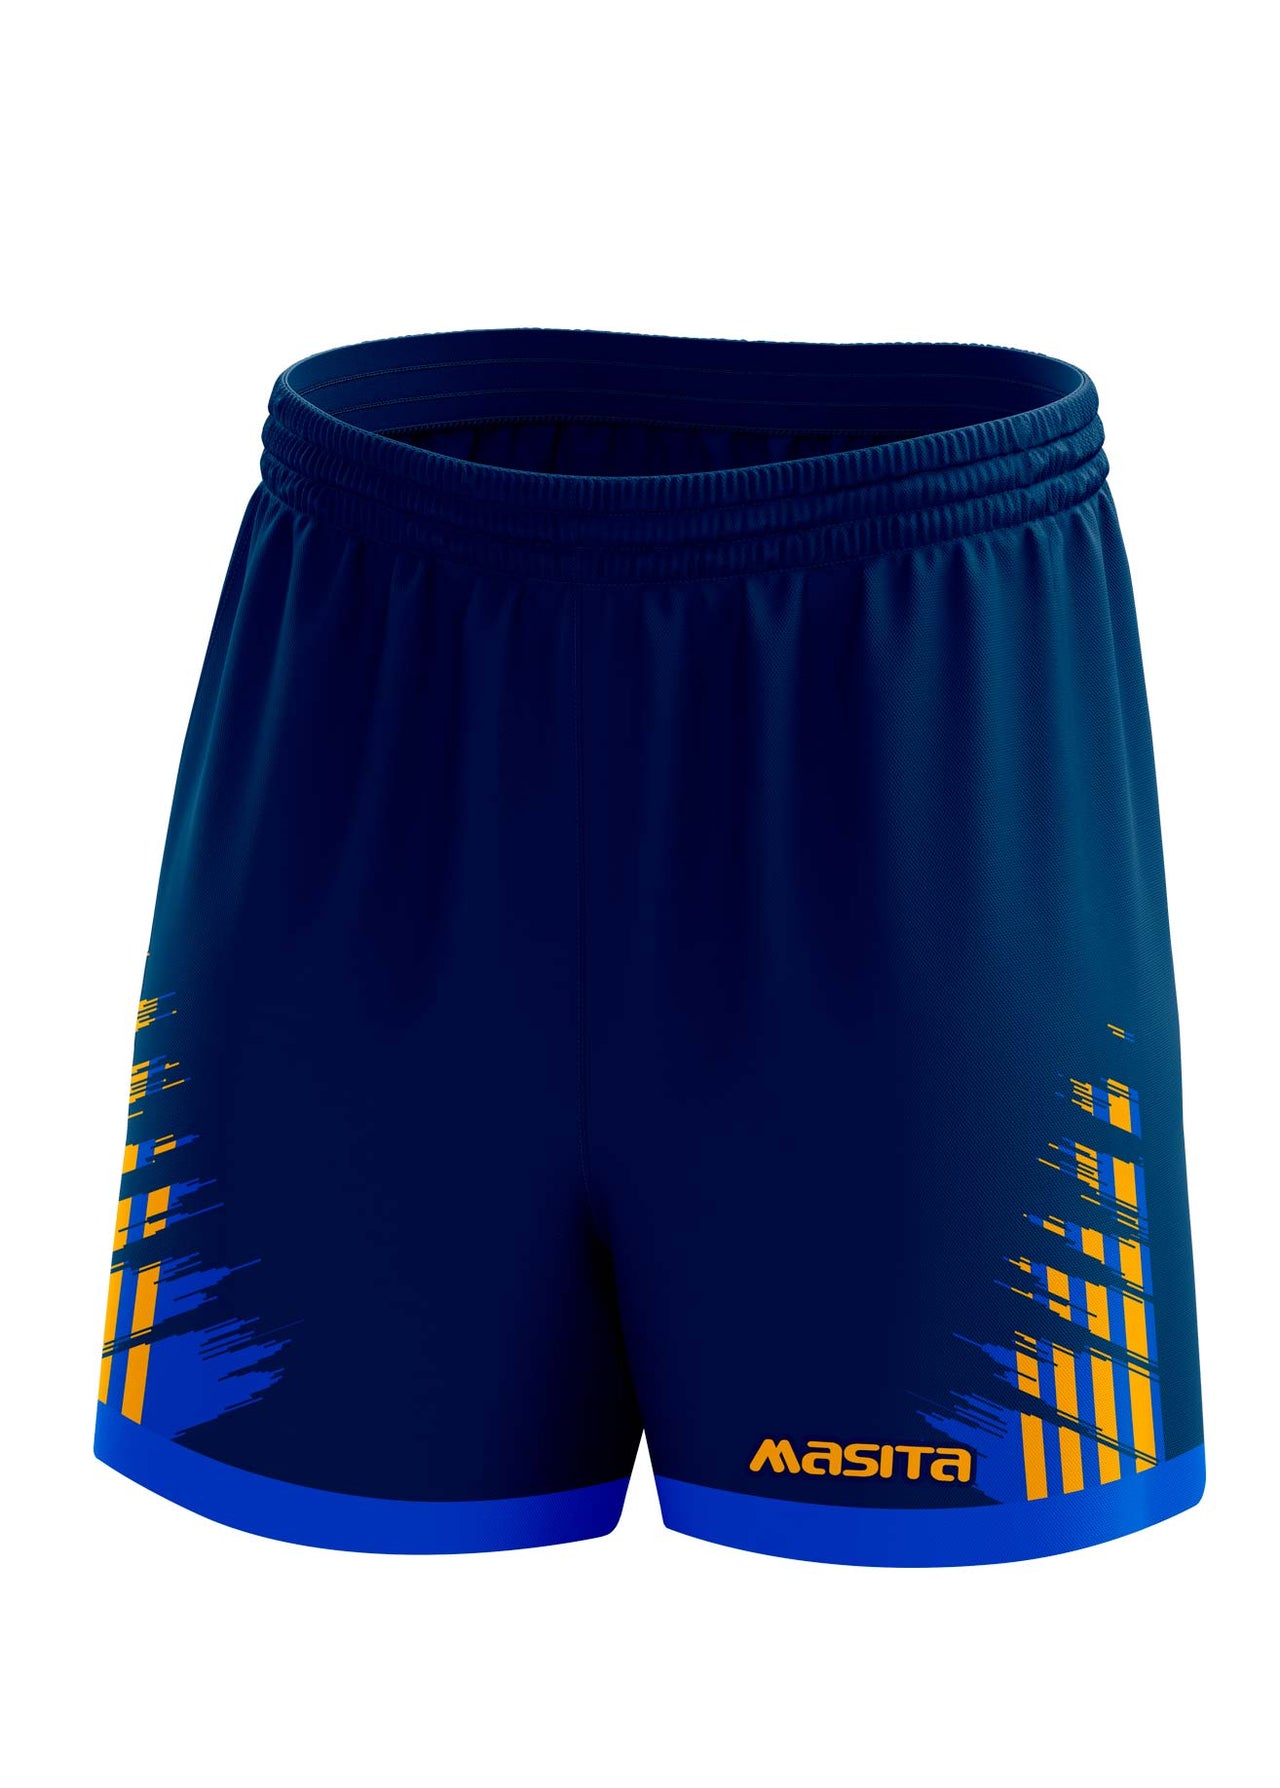 Barkley Gaelic Shorts Navy/Blue/Amber Adult